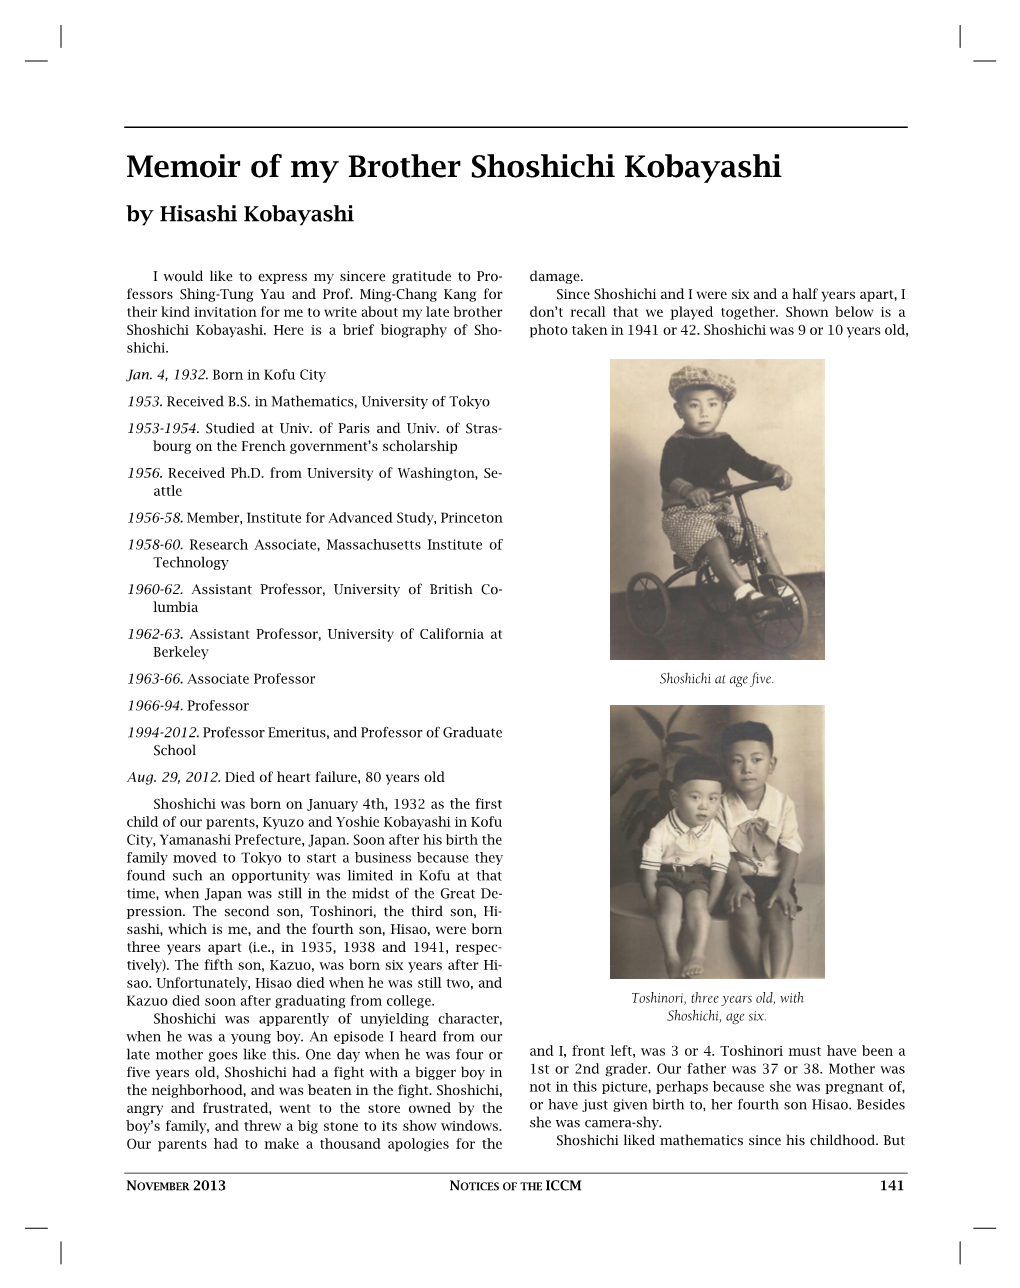 Memoir of My Brother Shoshichi Kobayashi by Hisashi Kobayashi